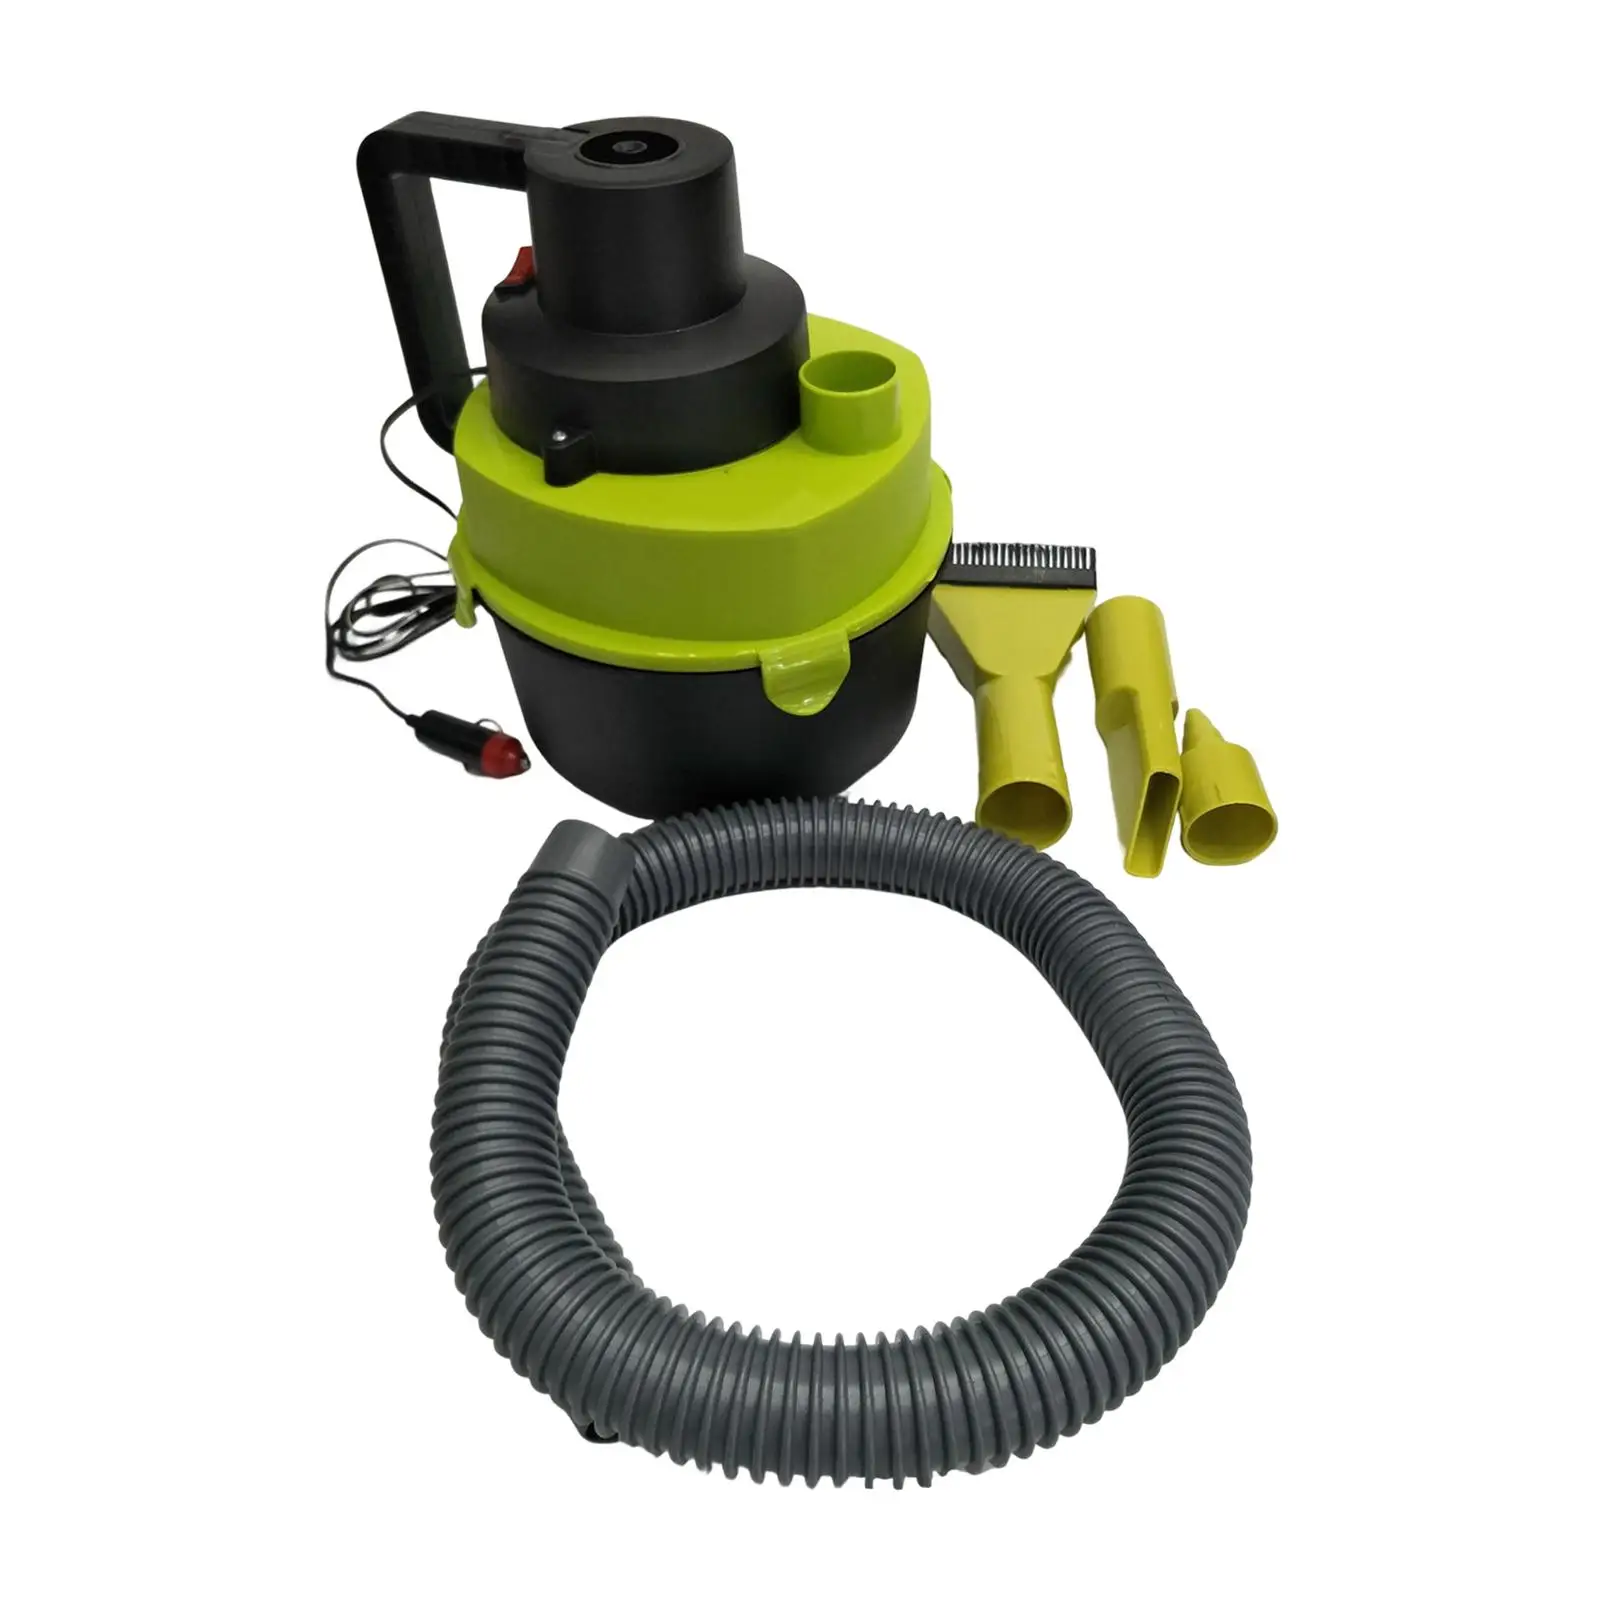 Car Vacuum Debris Dry Garbage 4L Multifunctional Handheld Liquid Shop Vacuum Cleaner for RV Home Window Seams Basement Cars